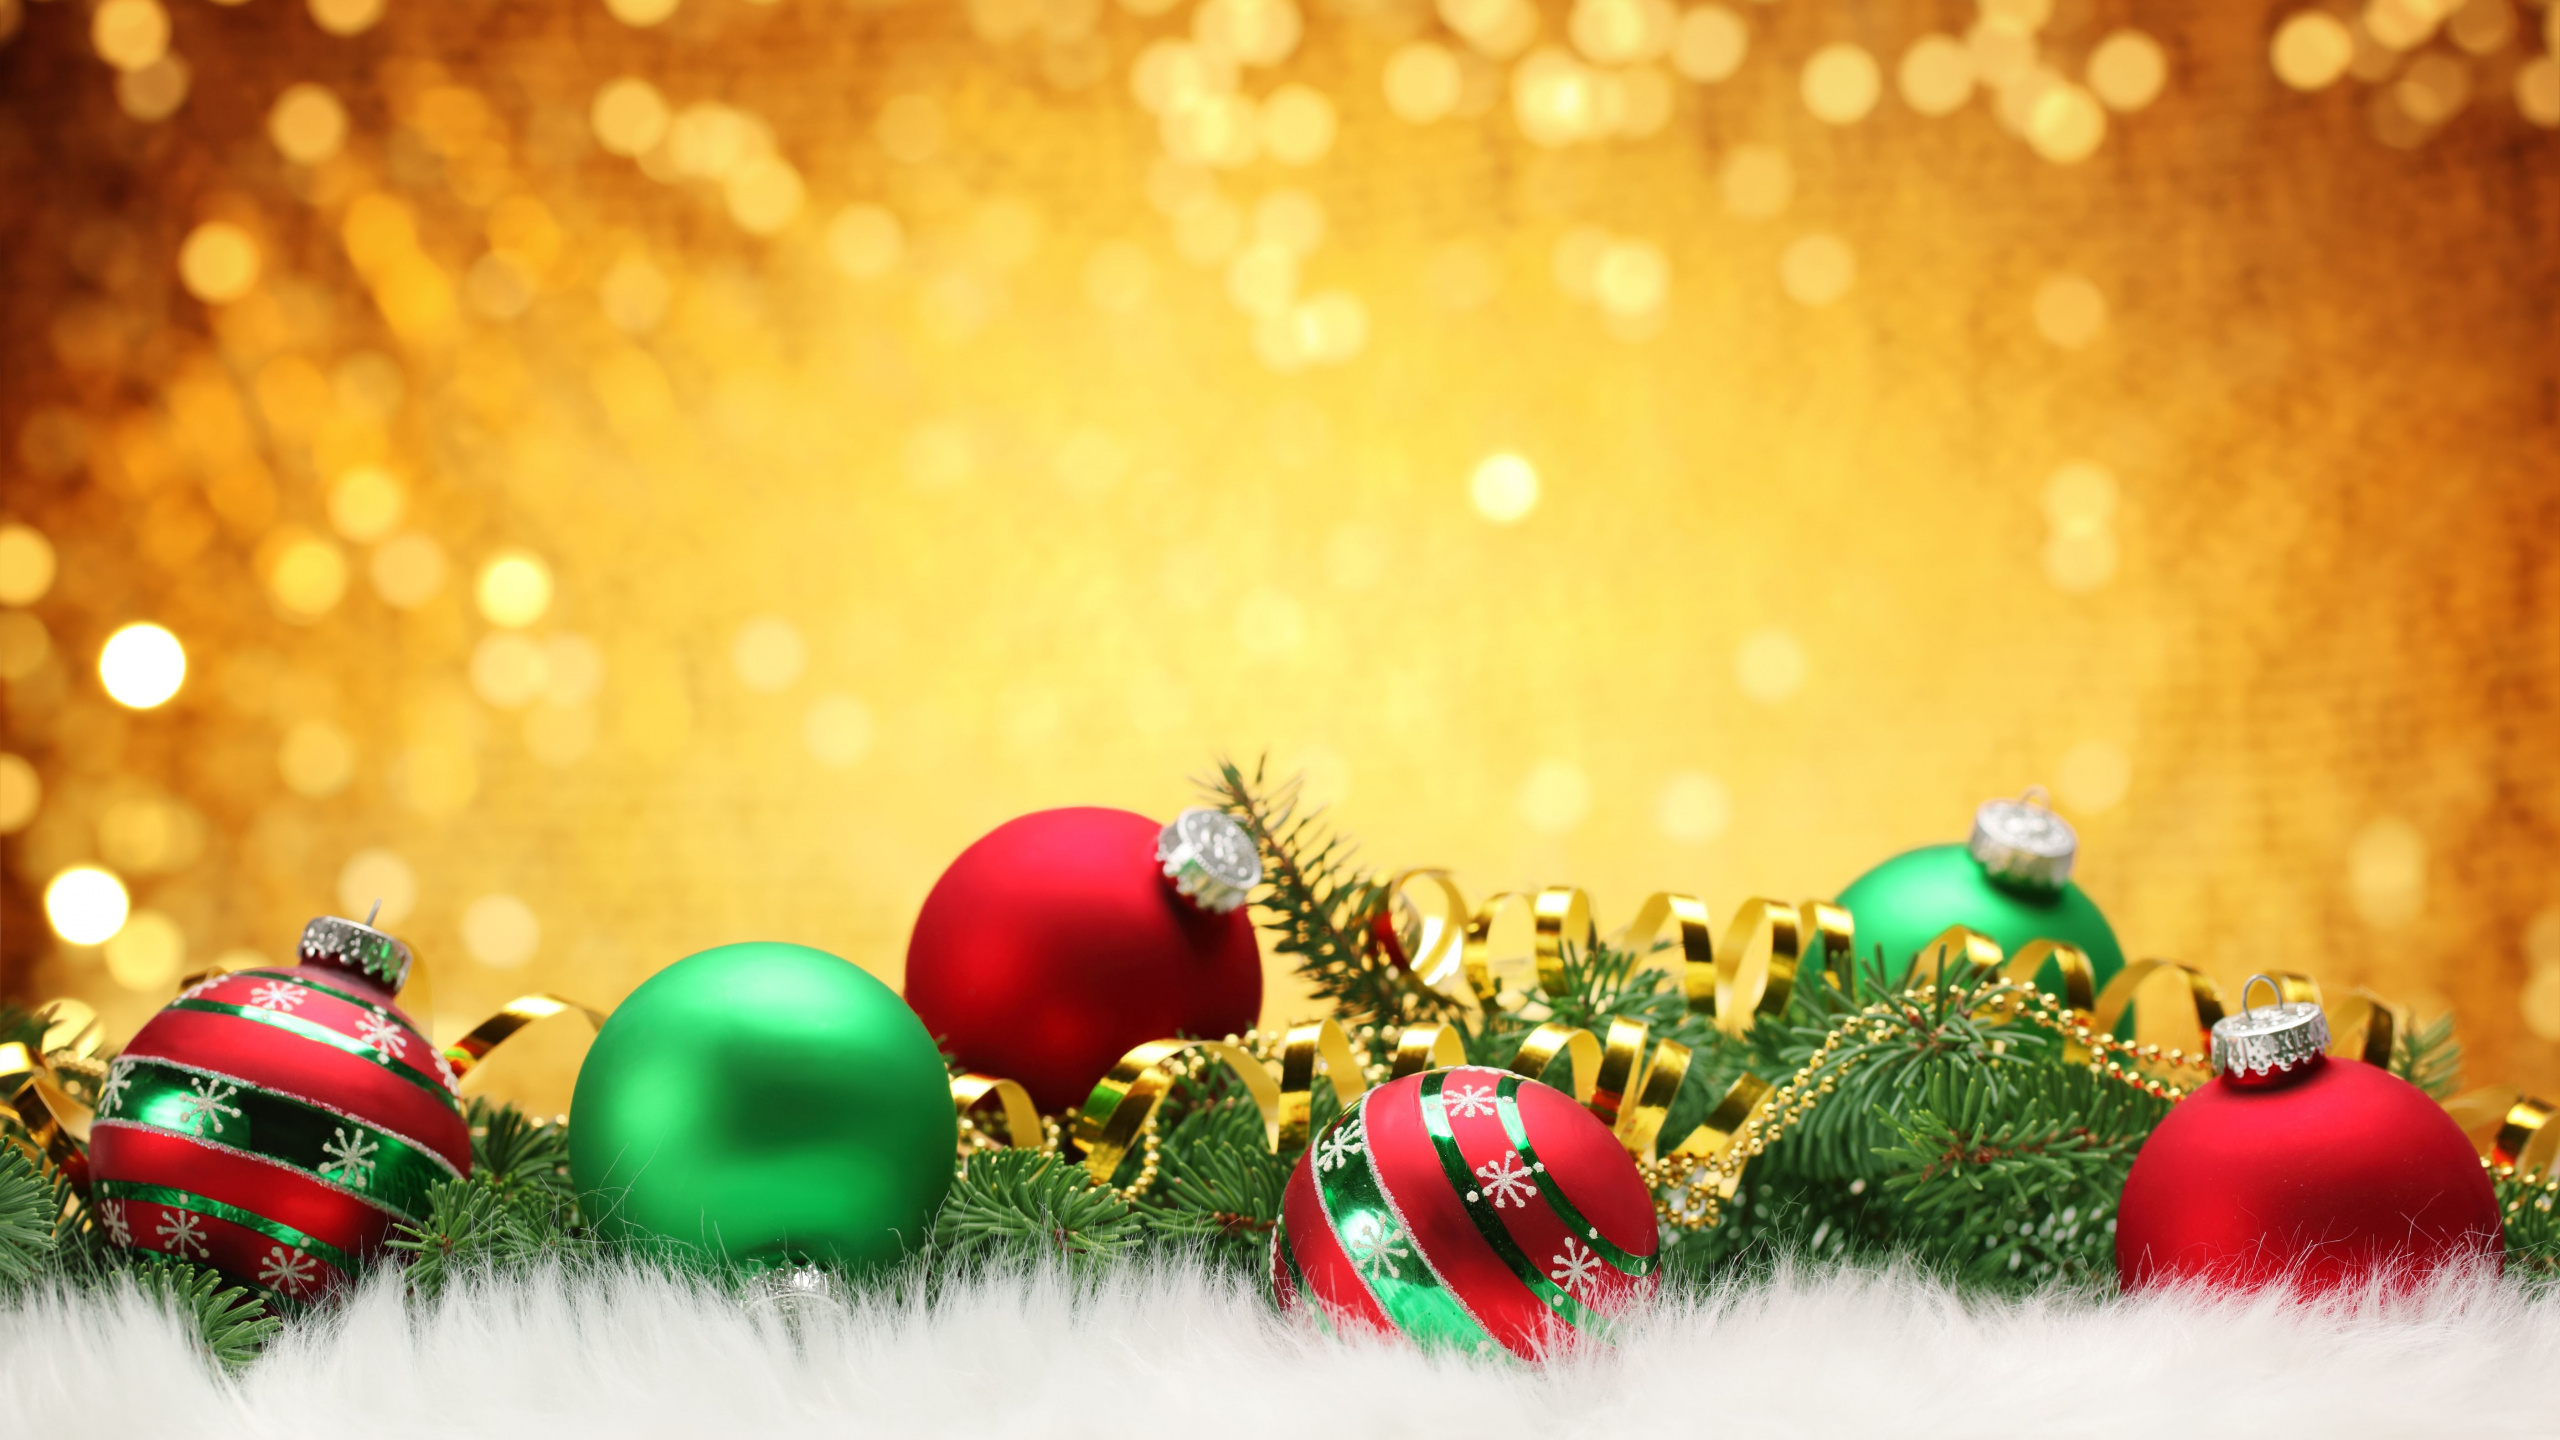 Christmas Ornament, Christmas Decoration, Christmas, Grass, Fir. Wallpaper in 2560x1440 Resolution